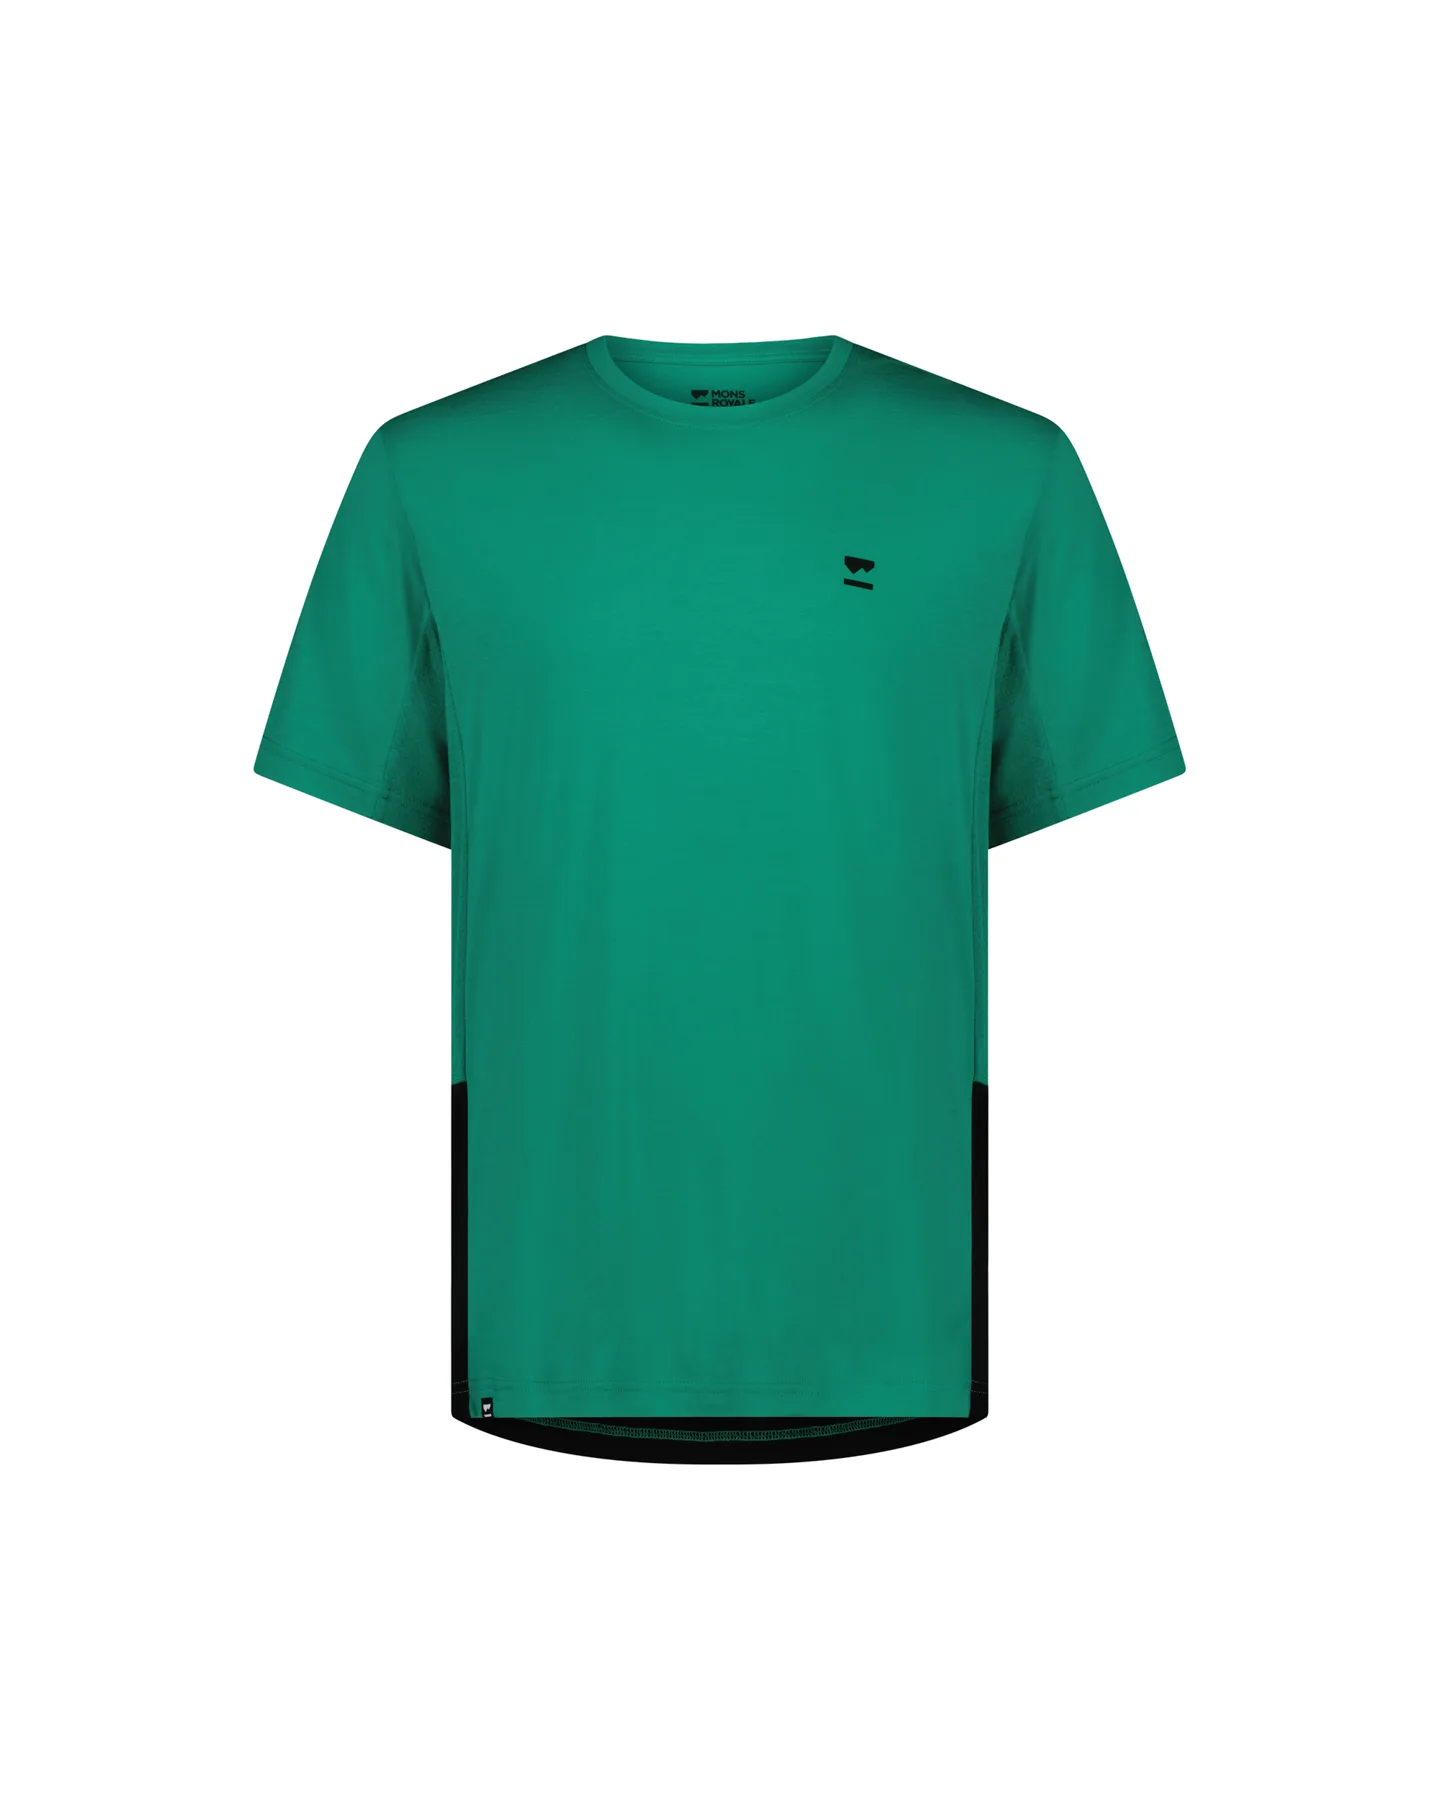 Mons Royale - Tarn Merino Shift T-Shirt - Pop Green / Black - Grøn, Sort L